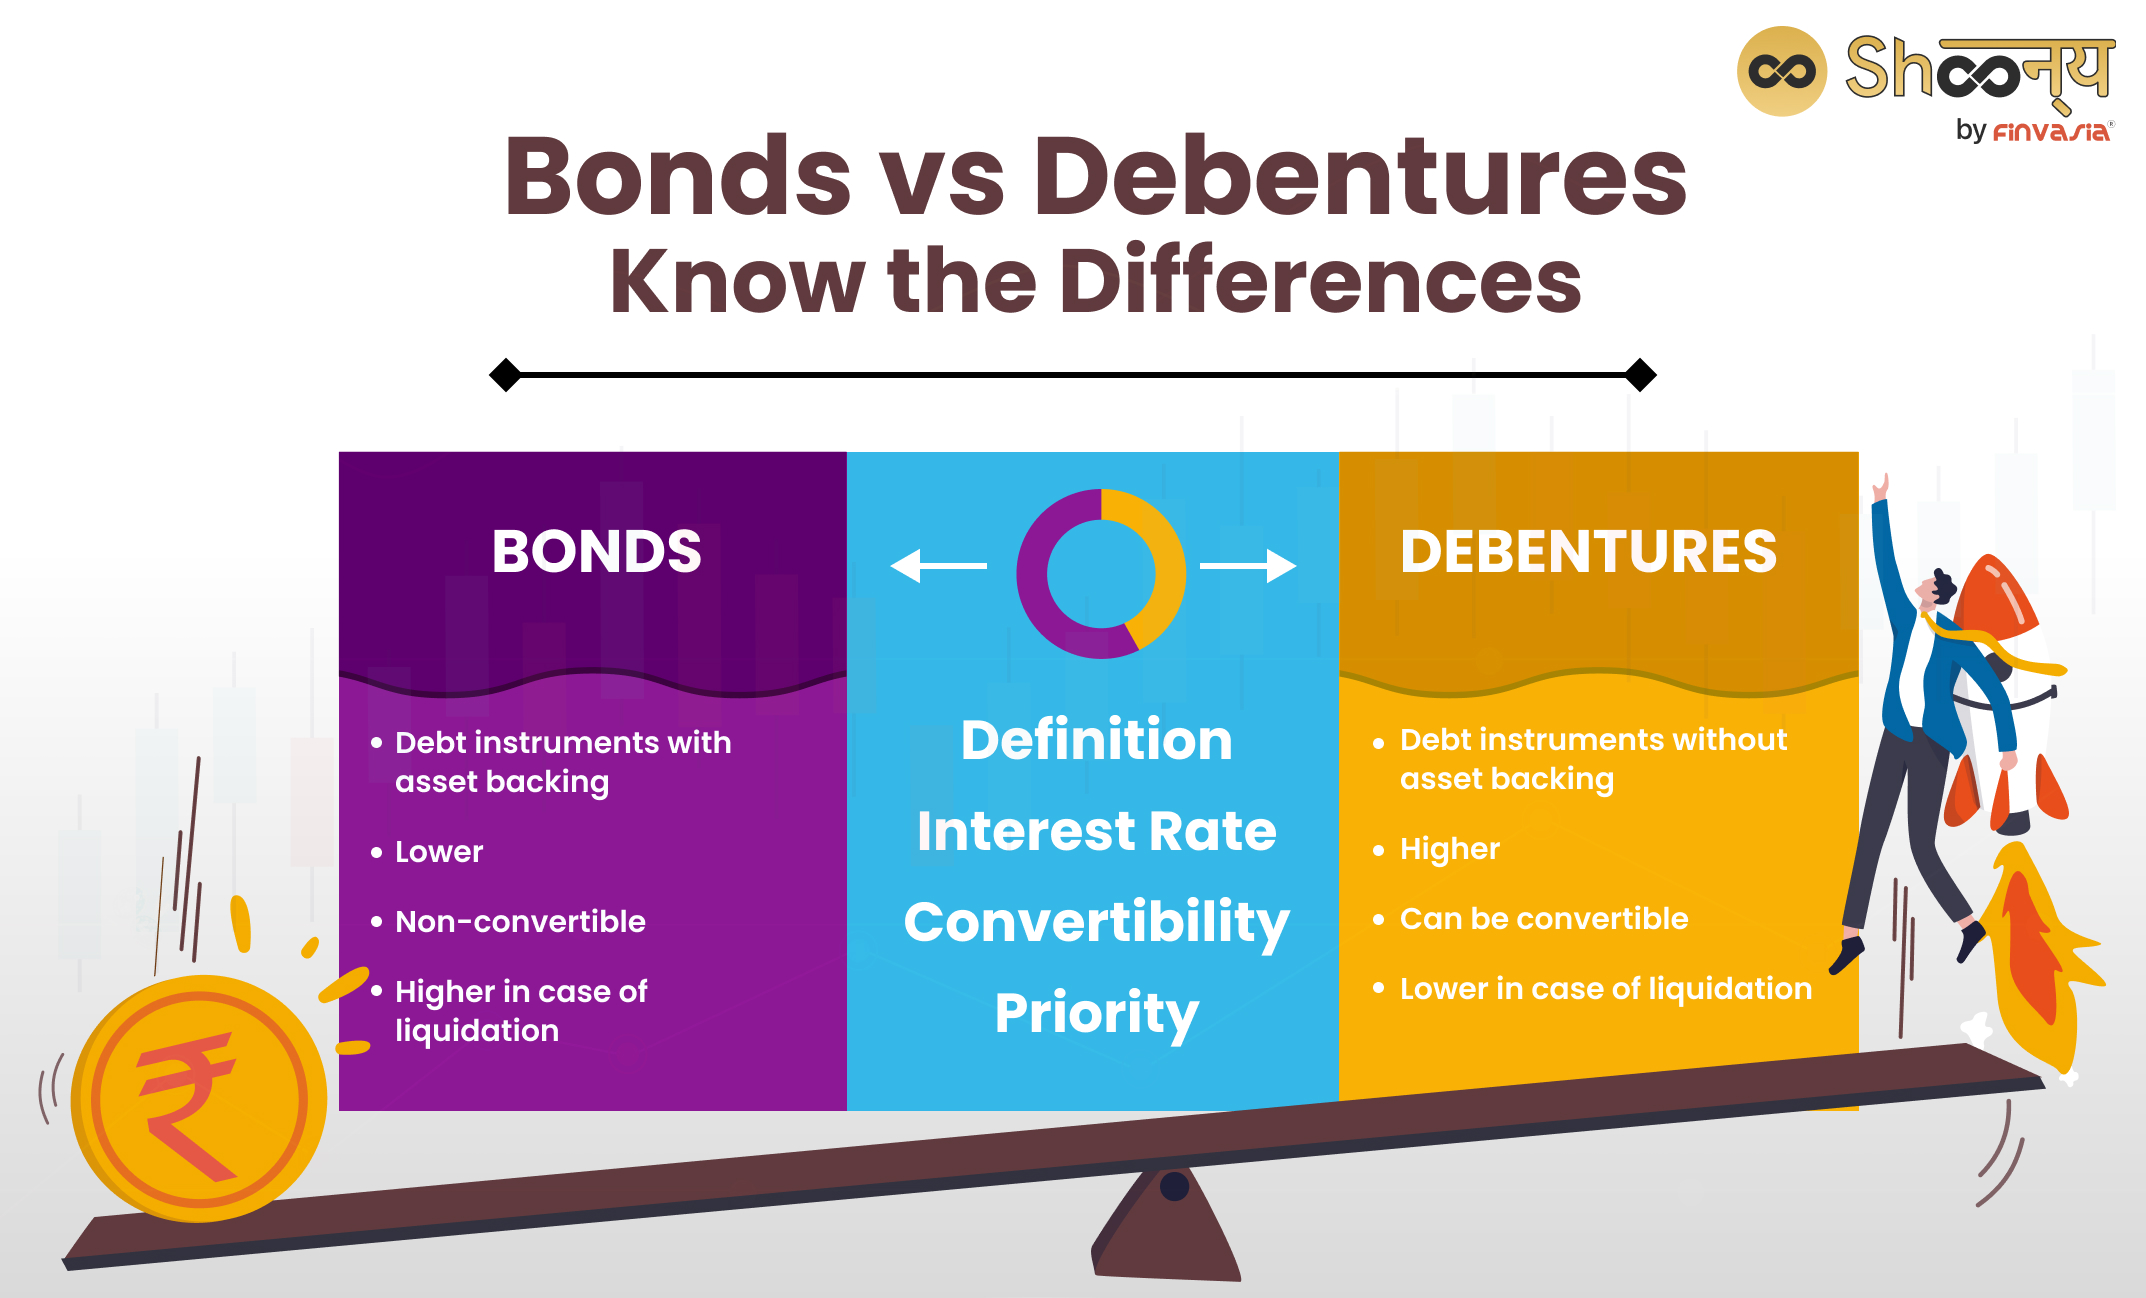 Bonds vs Debentures: Know the Differences
